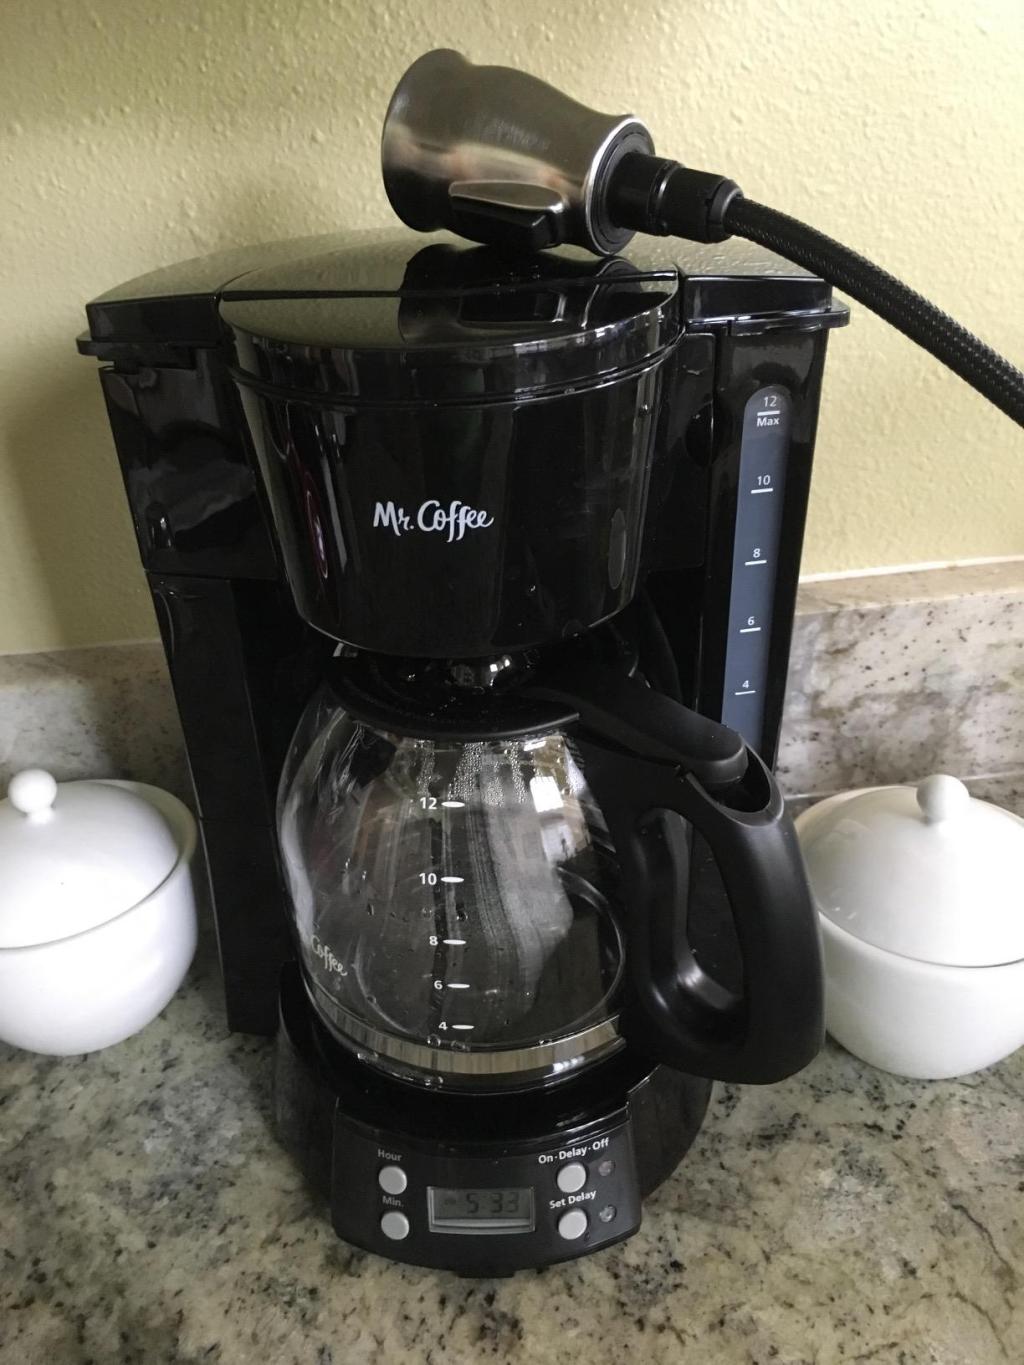 Mr. Coffee Coffeemaker on counter